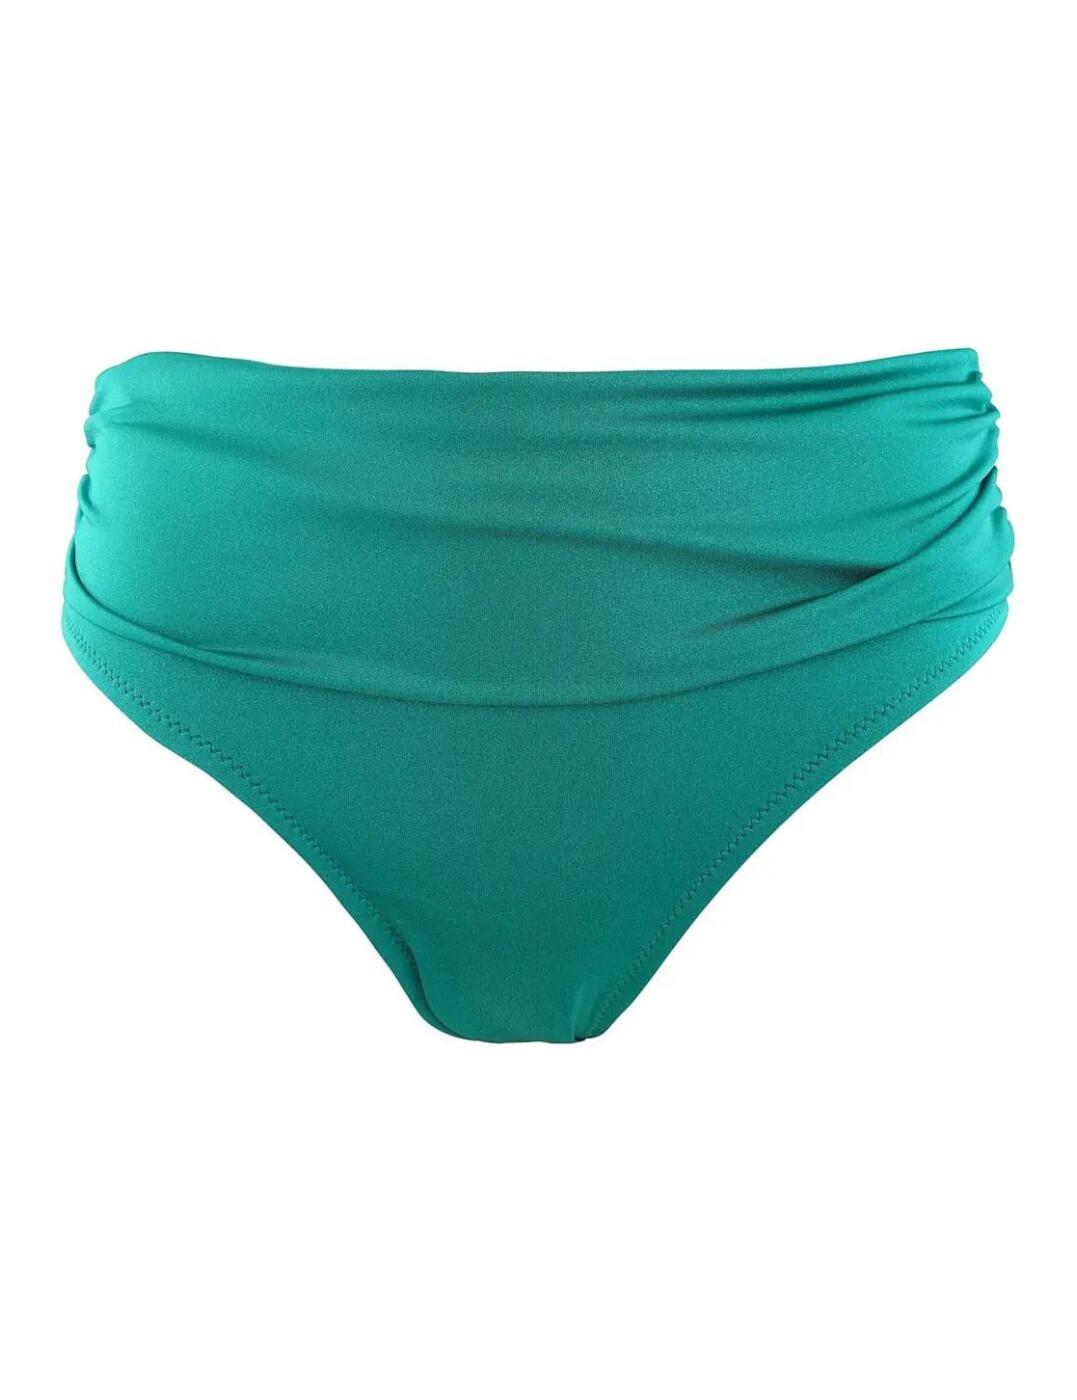 Pour Moi? Azure Fold Bikini Brief Emerald